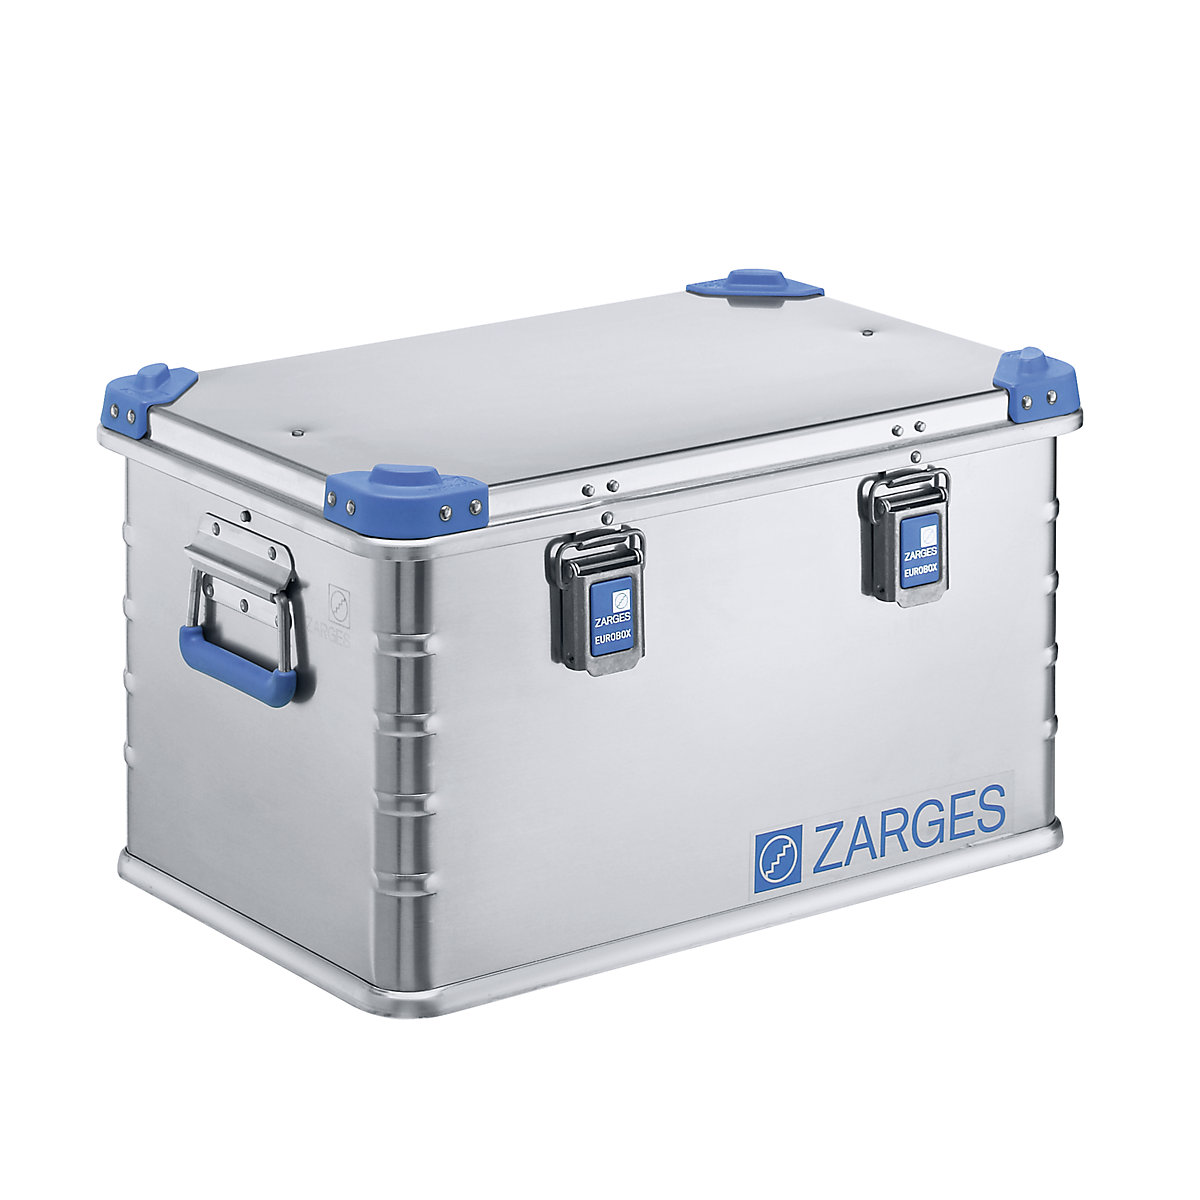 Aluminium universal box – ZARGES